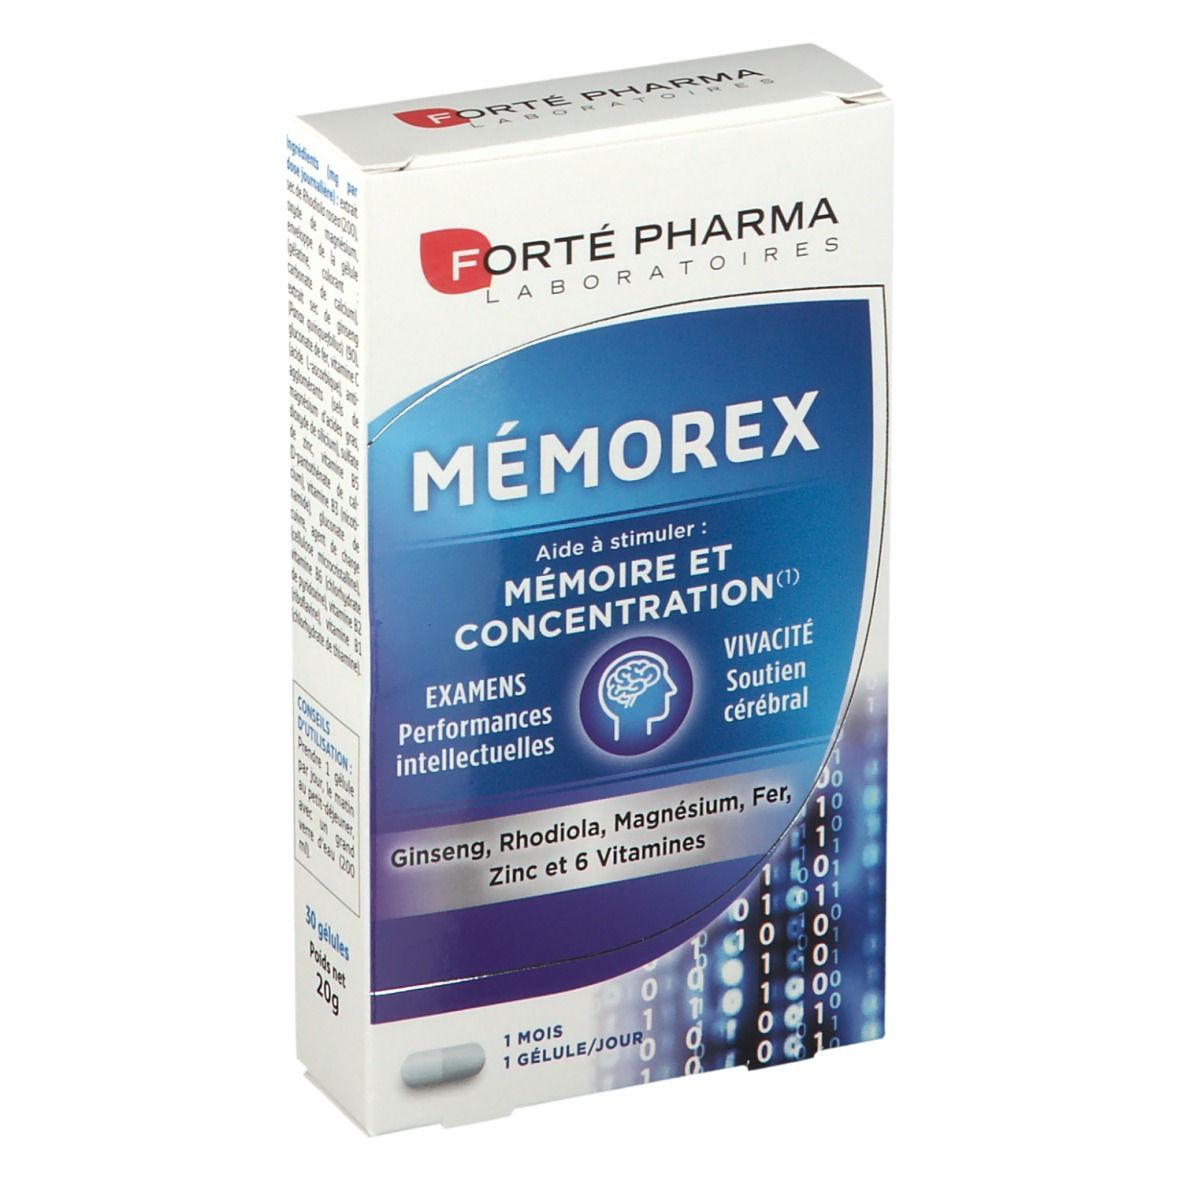 Forté Pharma Memorex